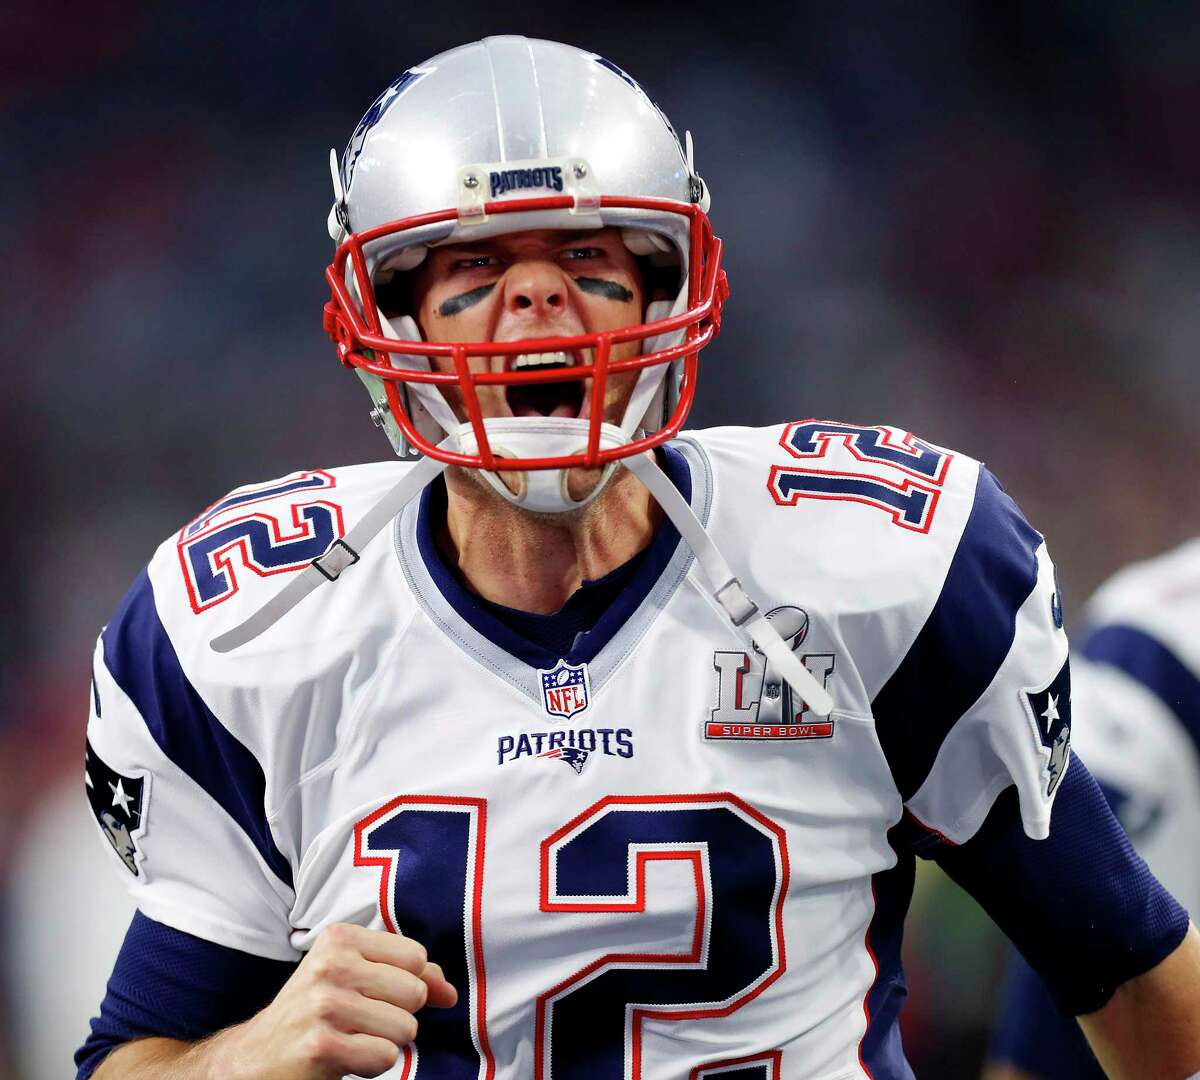 Tom Brady retires after 22 seasons, 7 Super Bowl titles